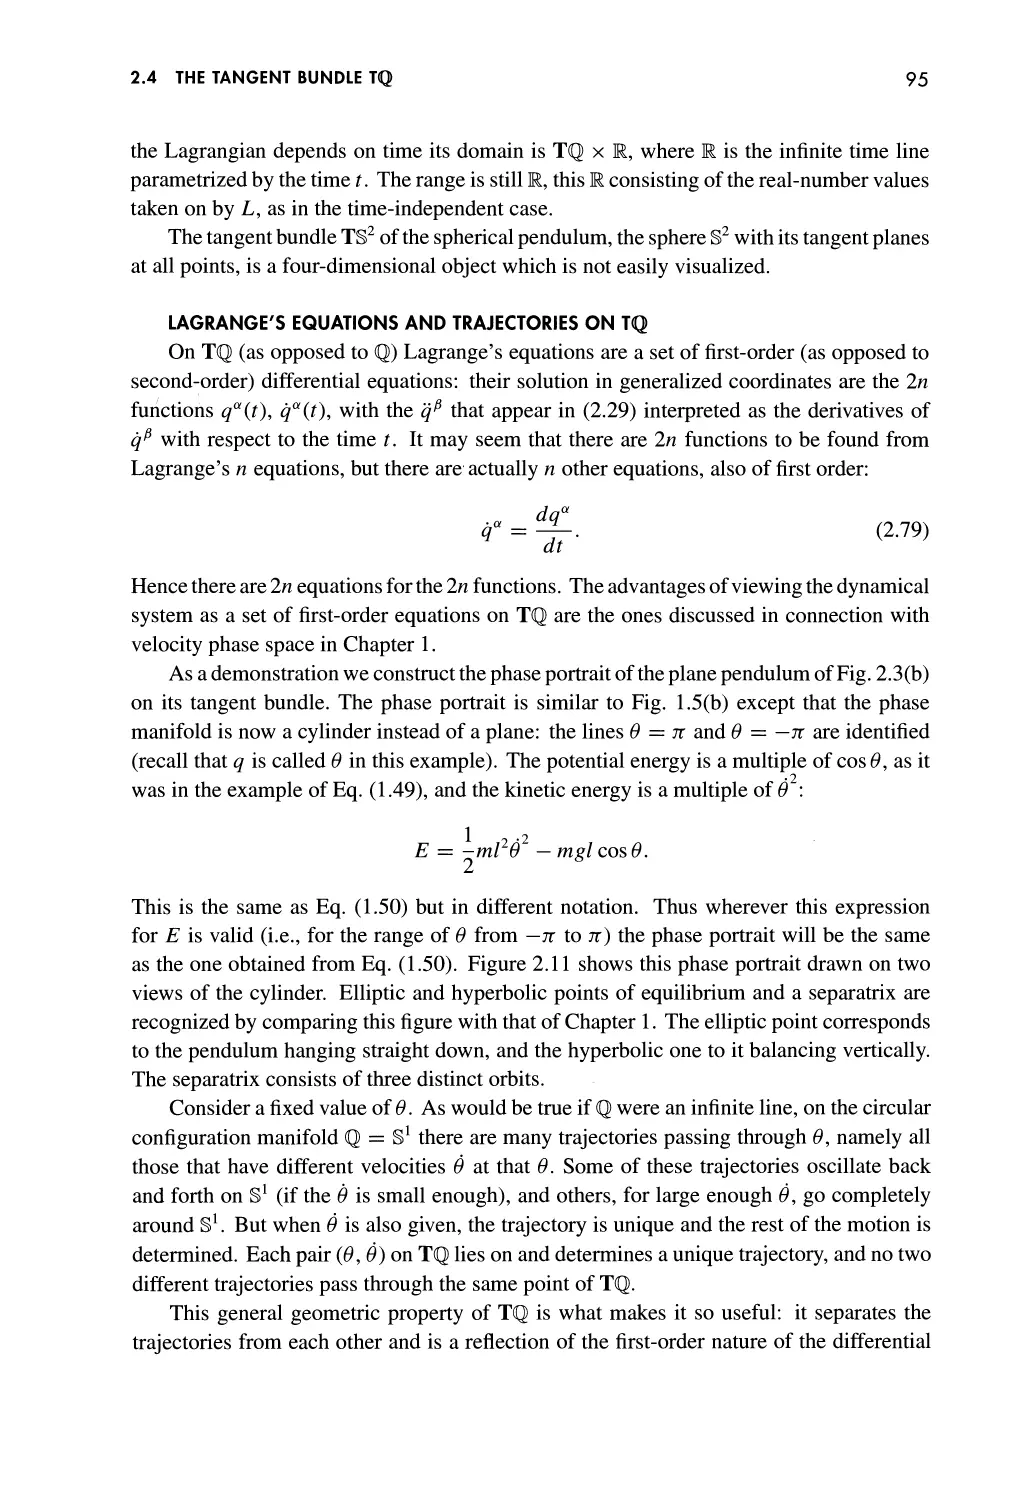 Lagrange's Equations and Trajectories on TQ